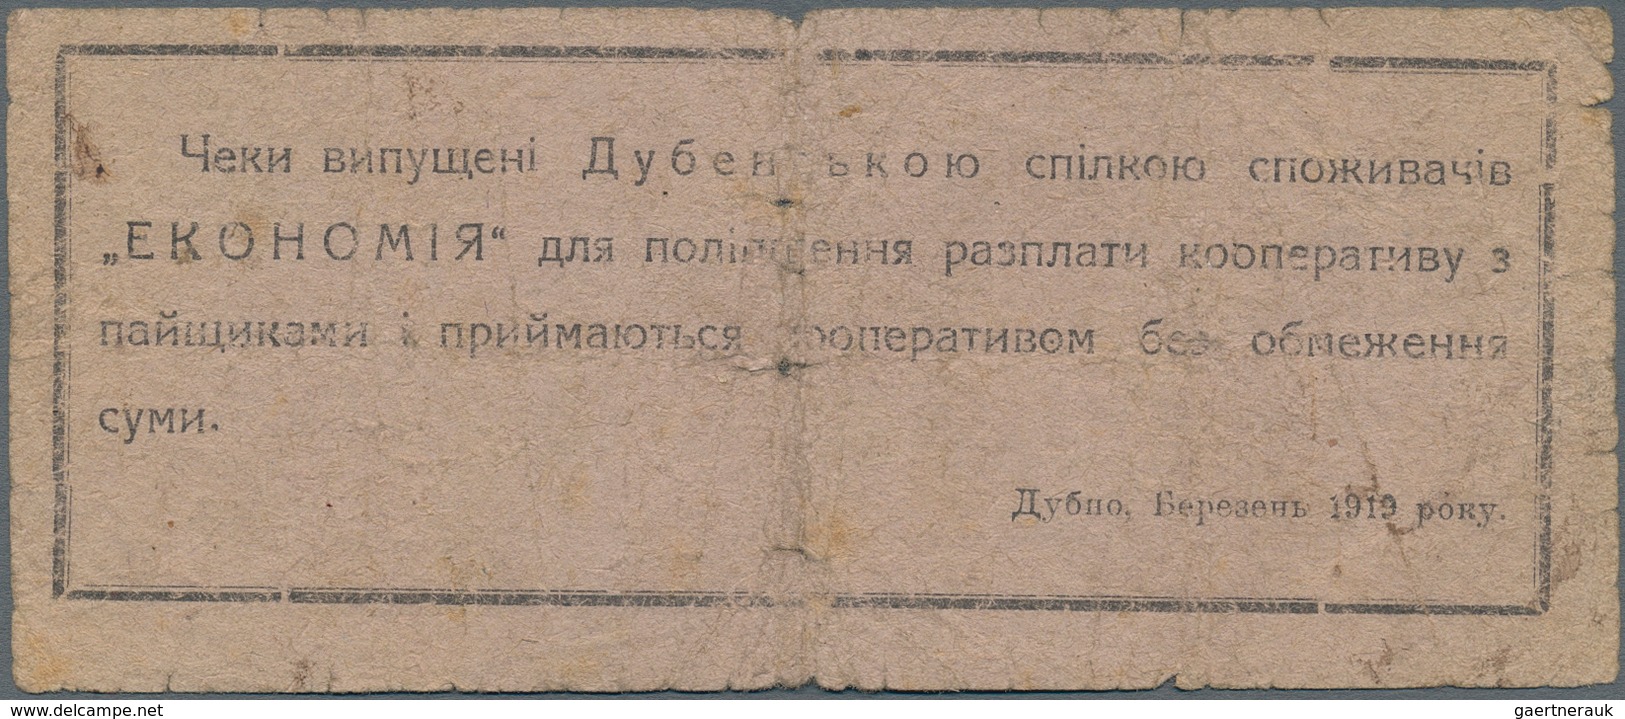 Ukraina / Ukraine: Check Of 3 Karbovantsiv 1919, P.NL (R 14237), Almost Well Worn With Tiny Holes At - Ucrania